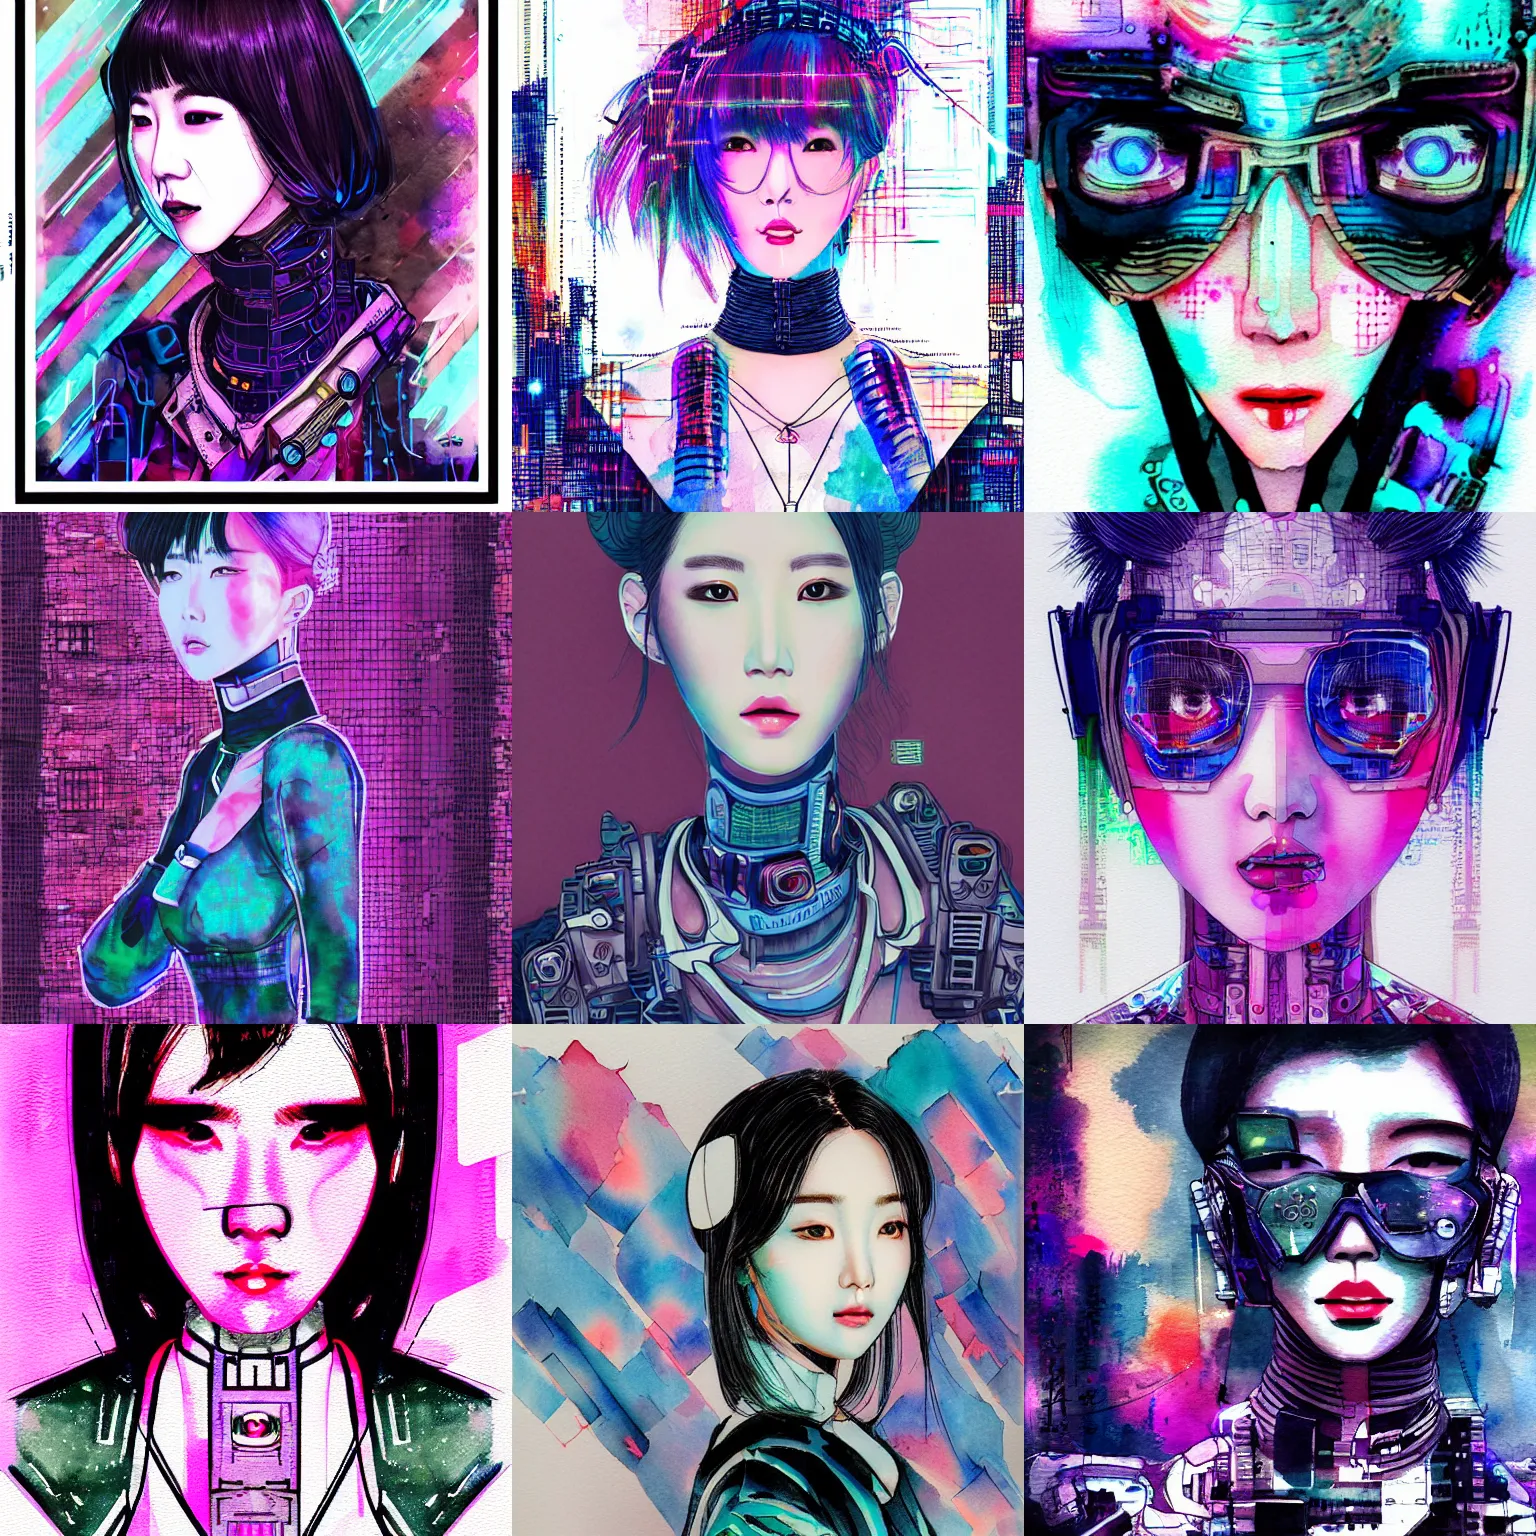 Prompt: korean women's fashion robot, intricate watercolor cyberpunk vaporwave portrait by tim doyle